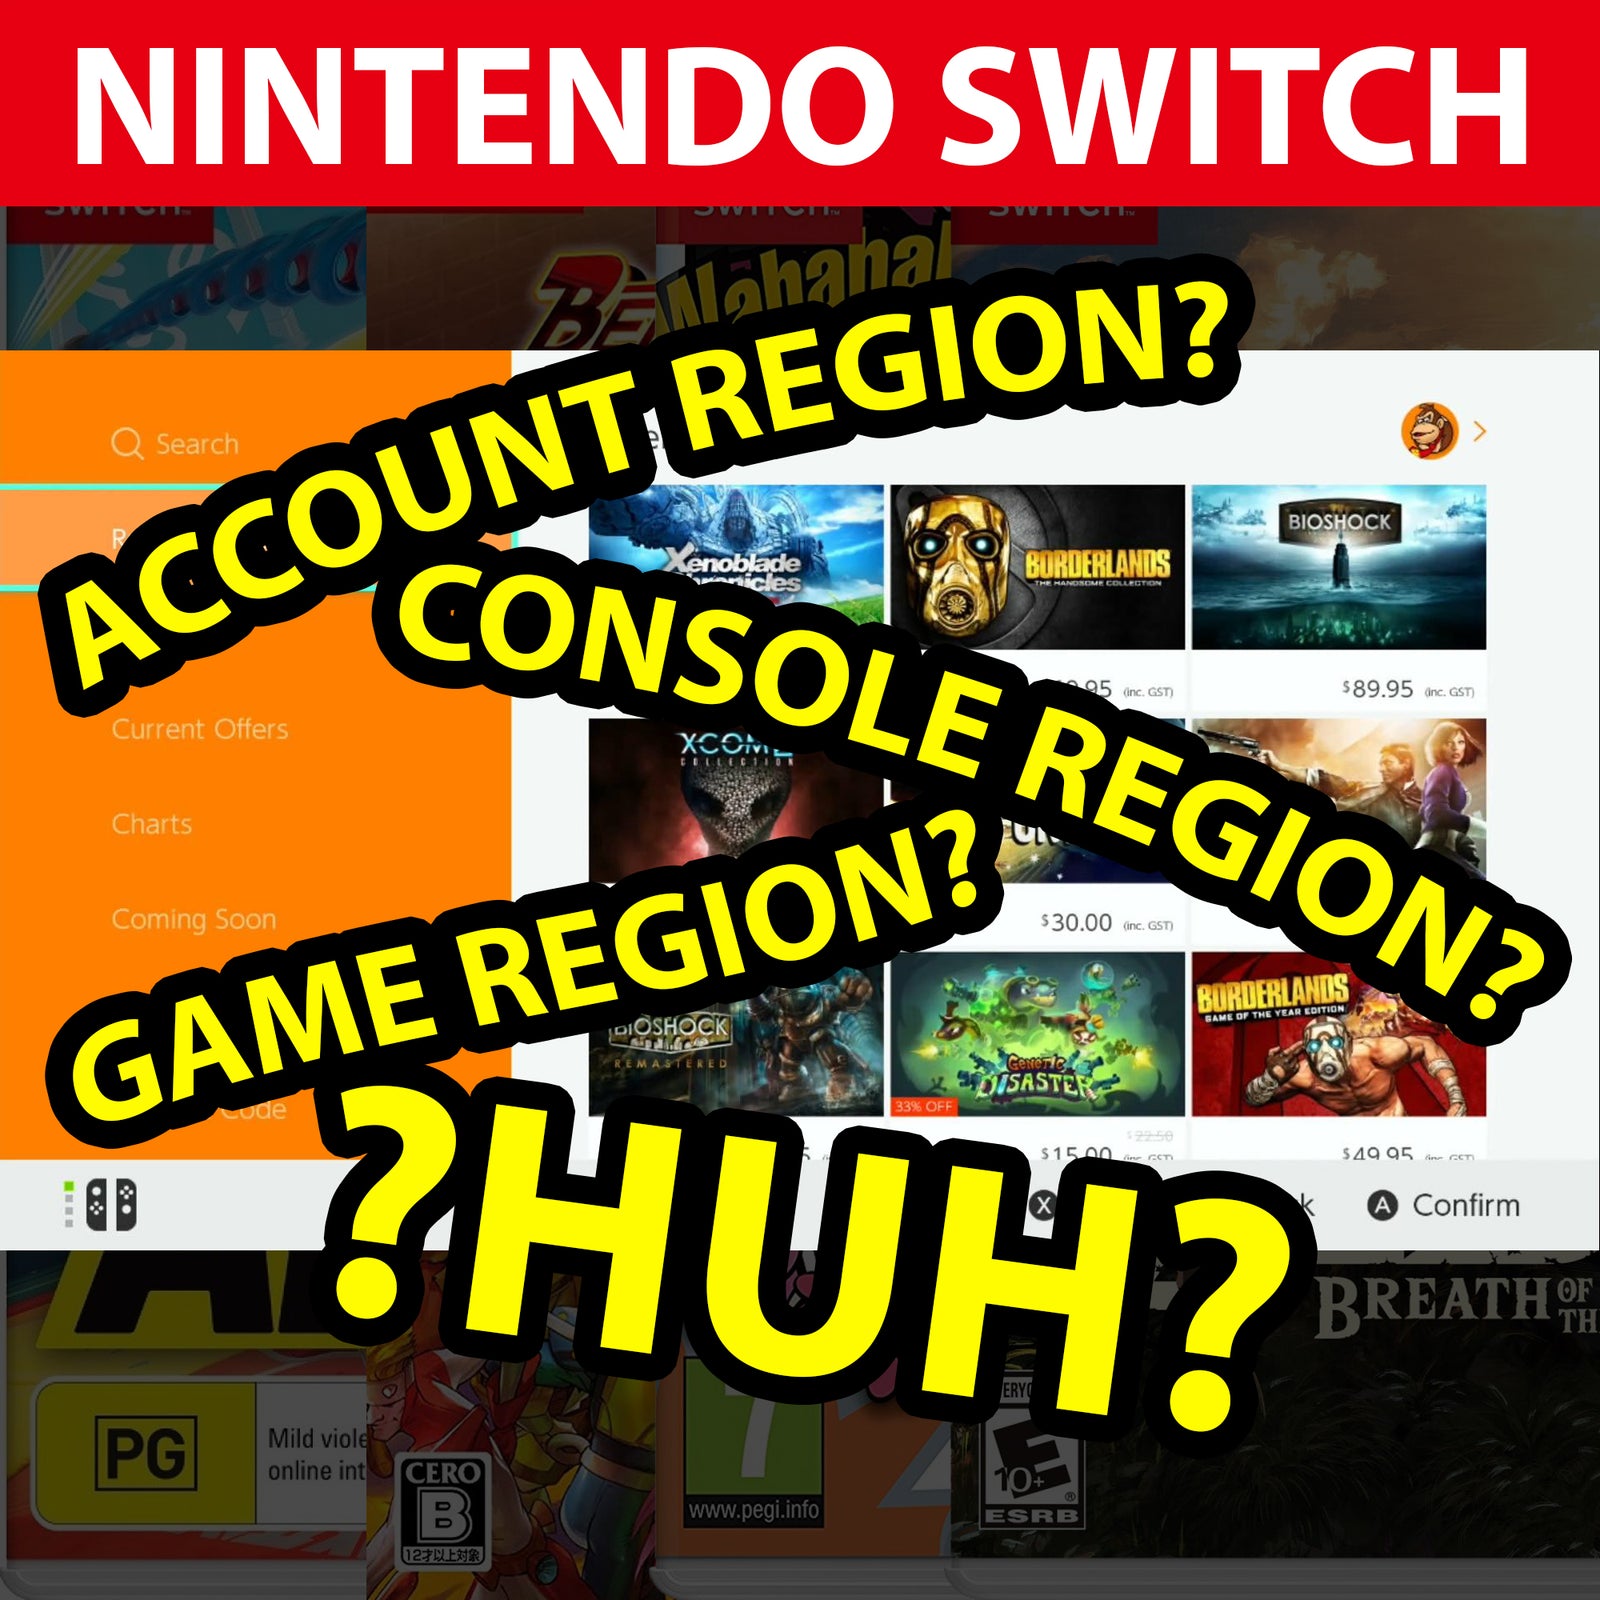 Nintendo Switch – Account Region, Console Region… - Shopitree.com